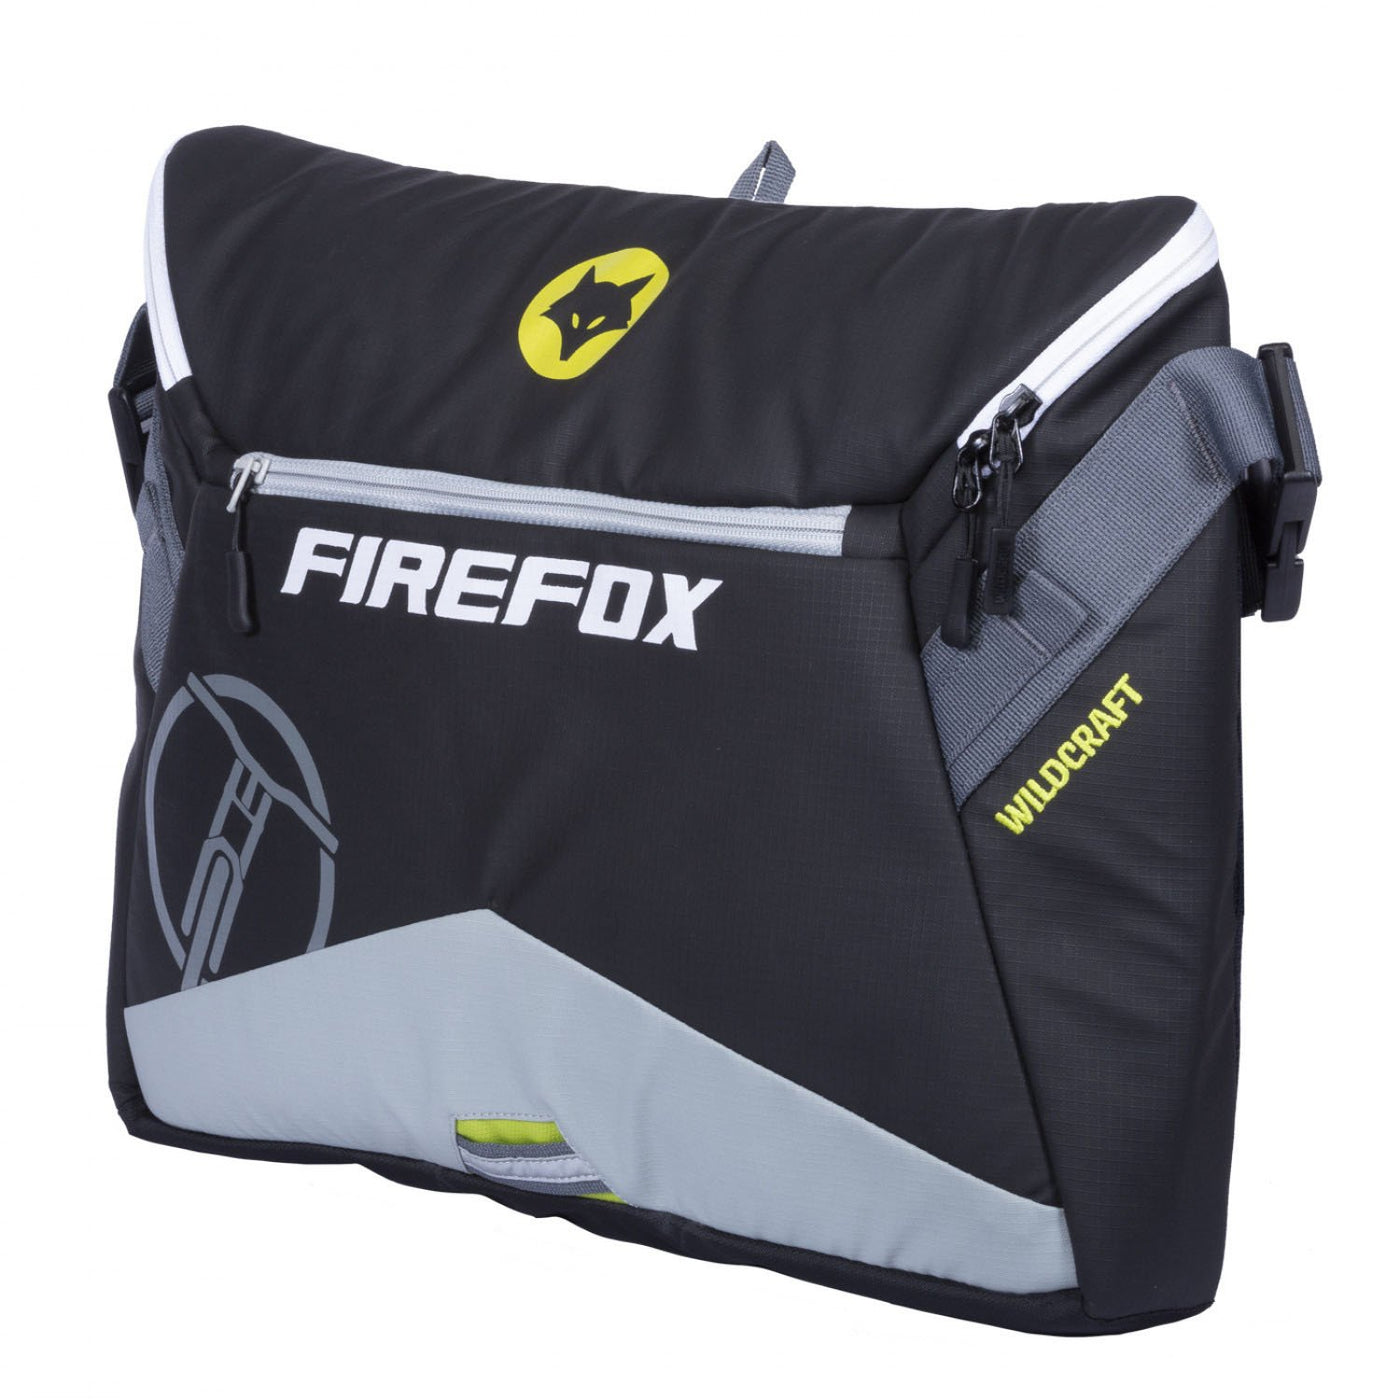 Firefox Cross Body Messenger Bag - Cyclop.in